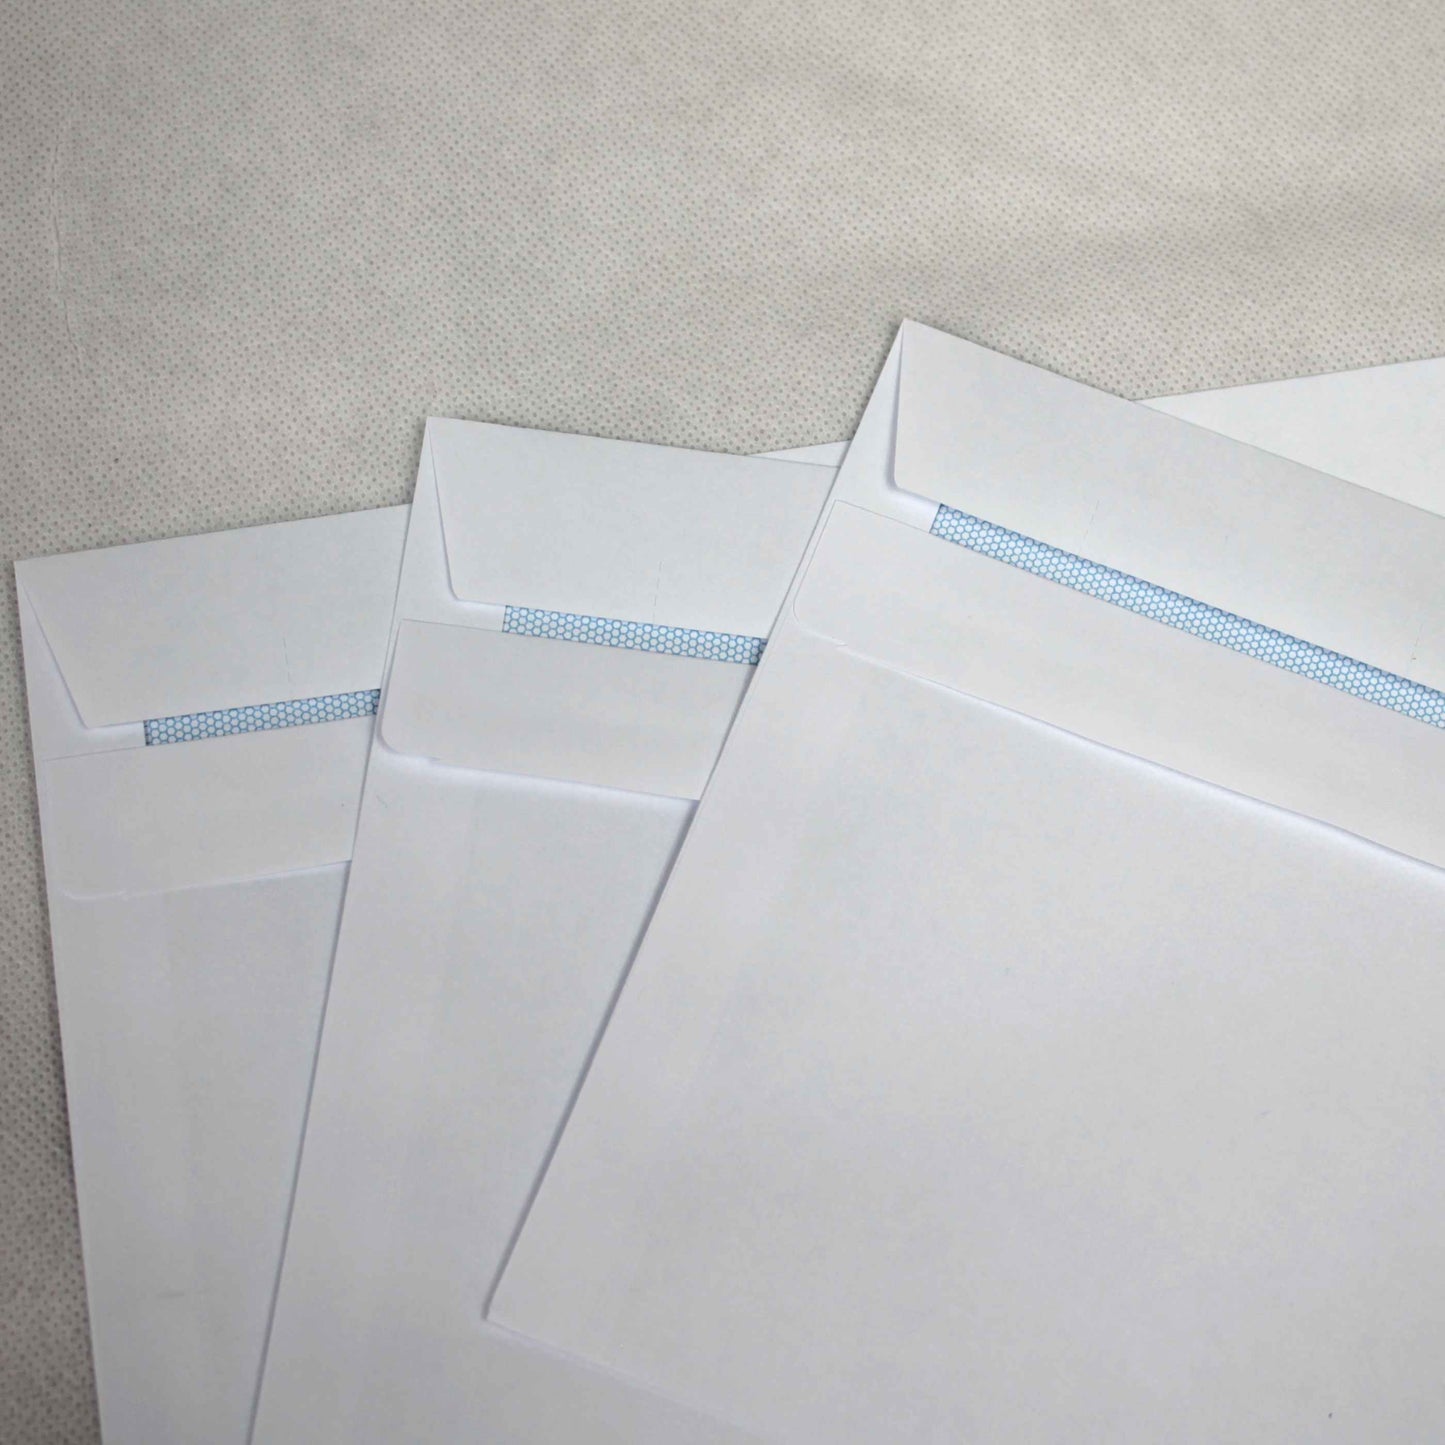 162x229mm C5 White Self Seal Envelopes (None Window)